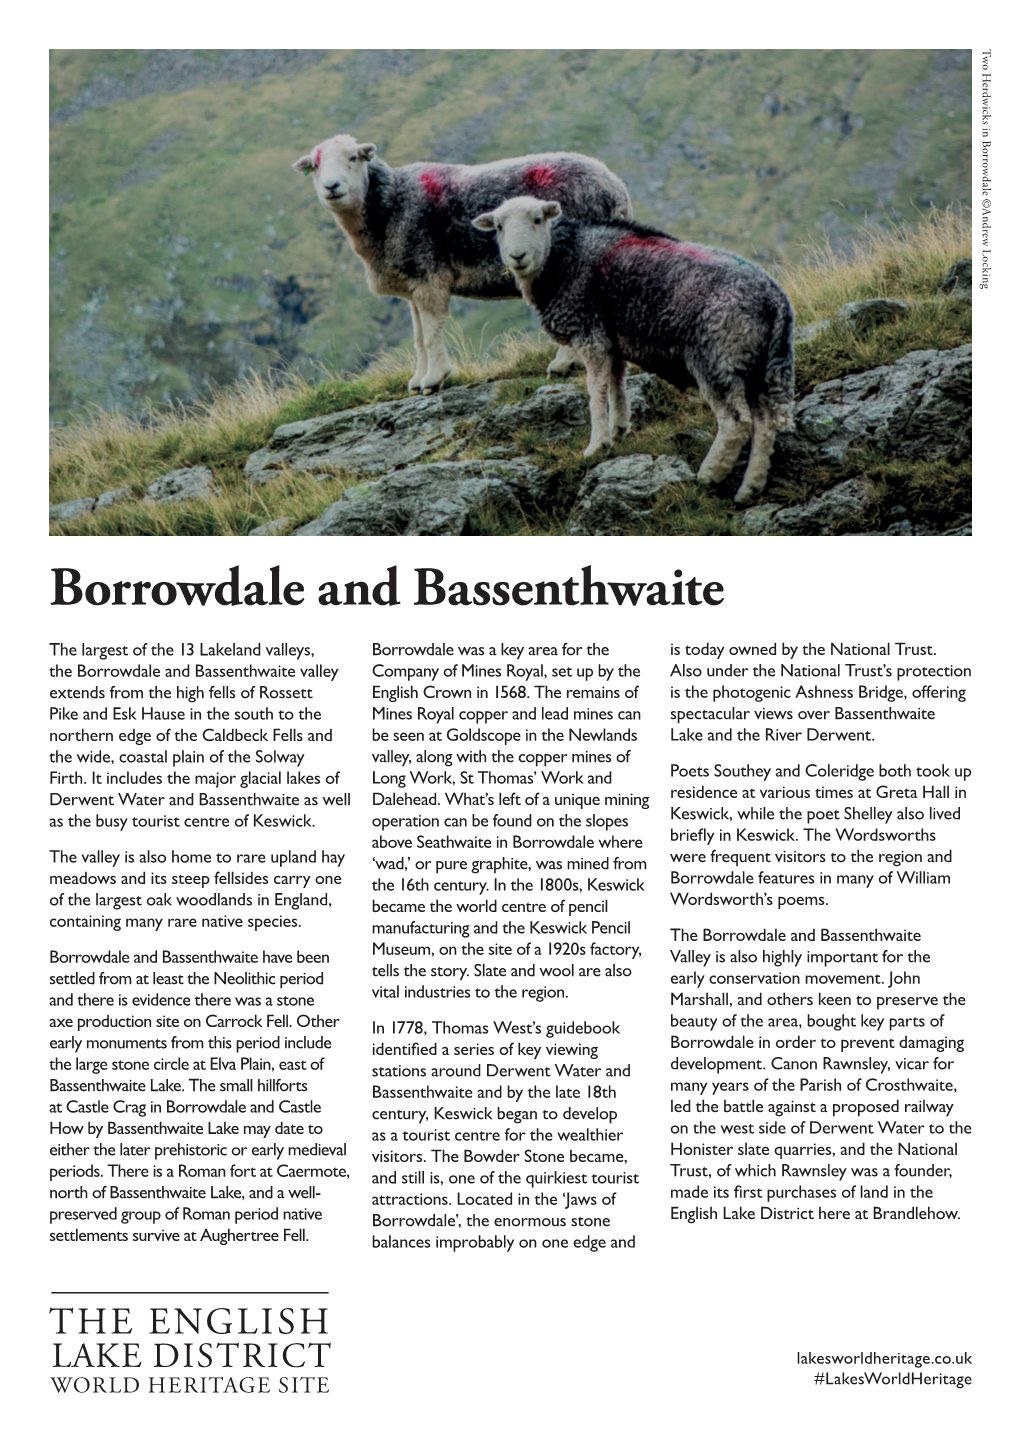 Borrowdale and Bassenthwaite